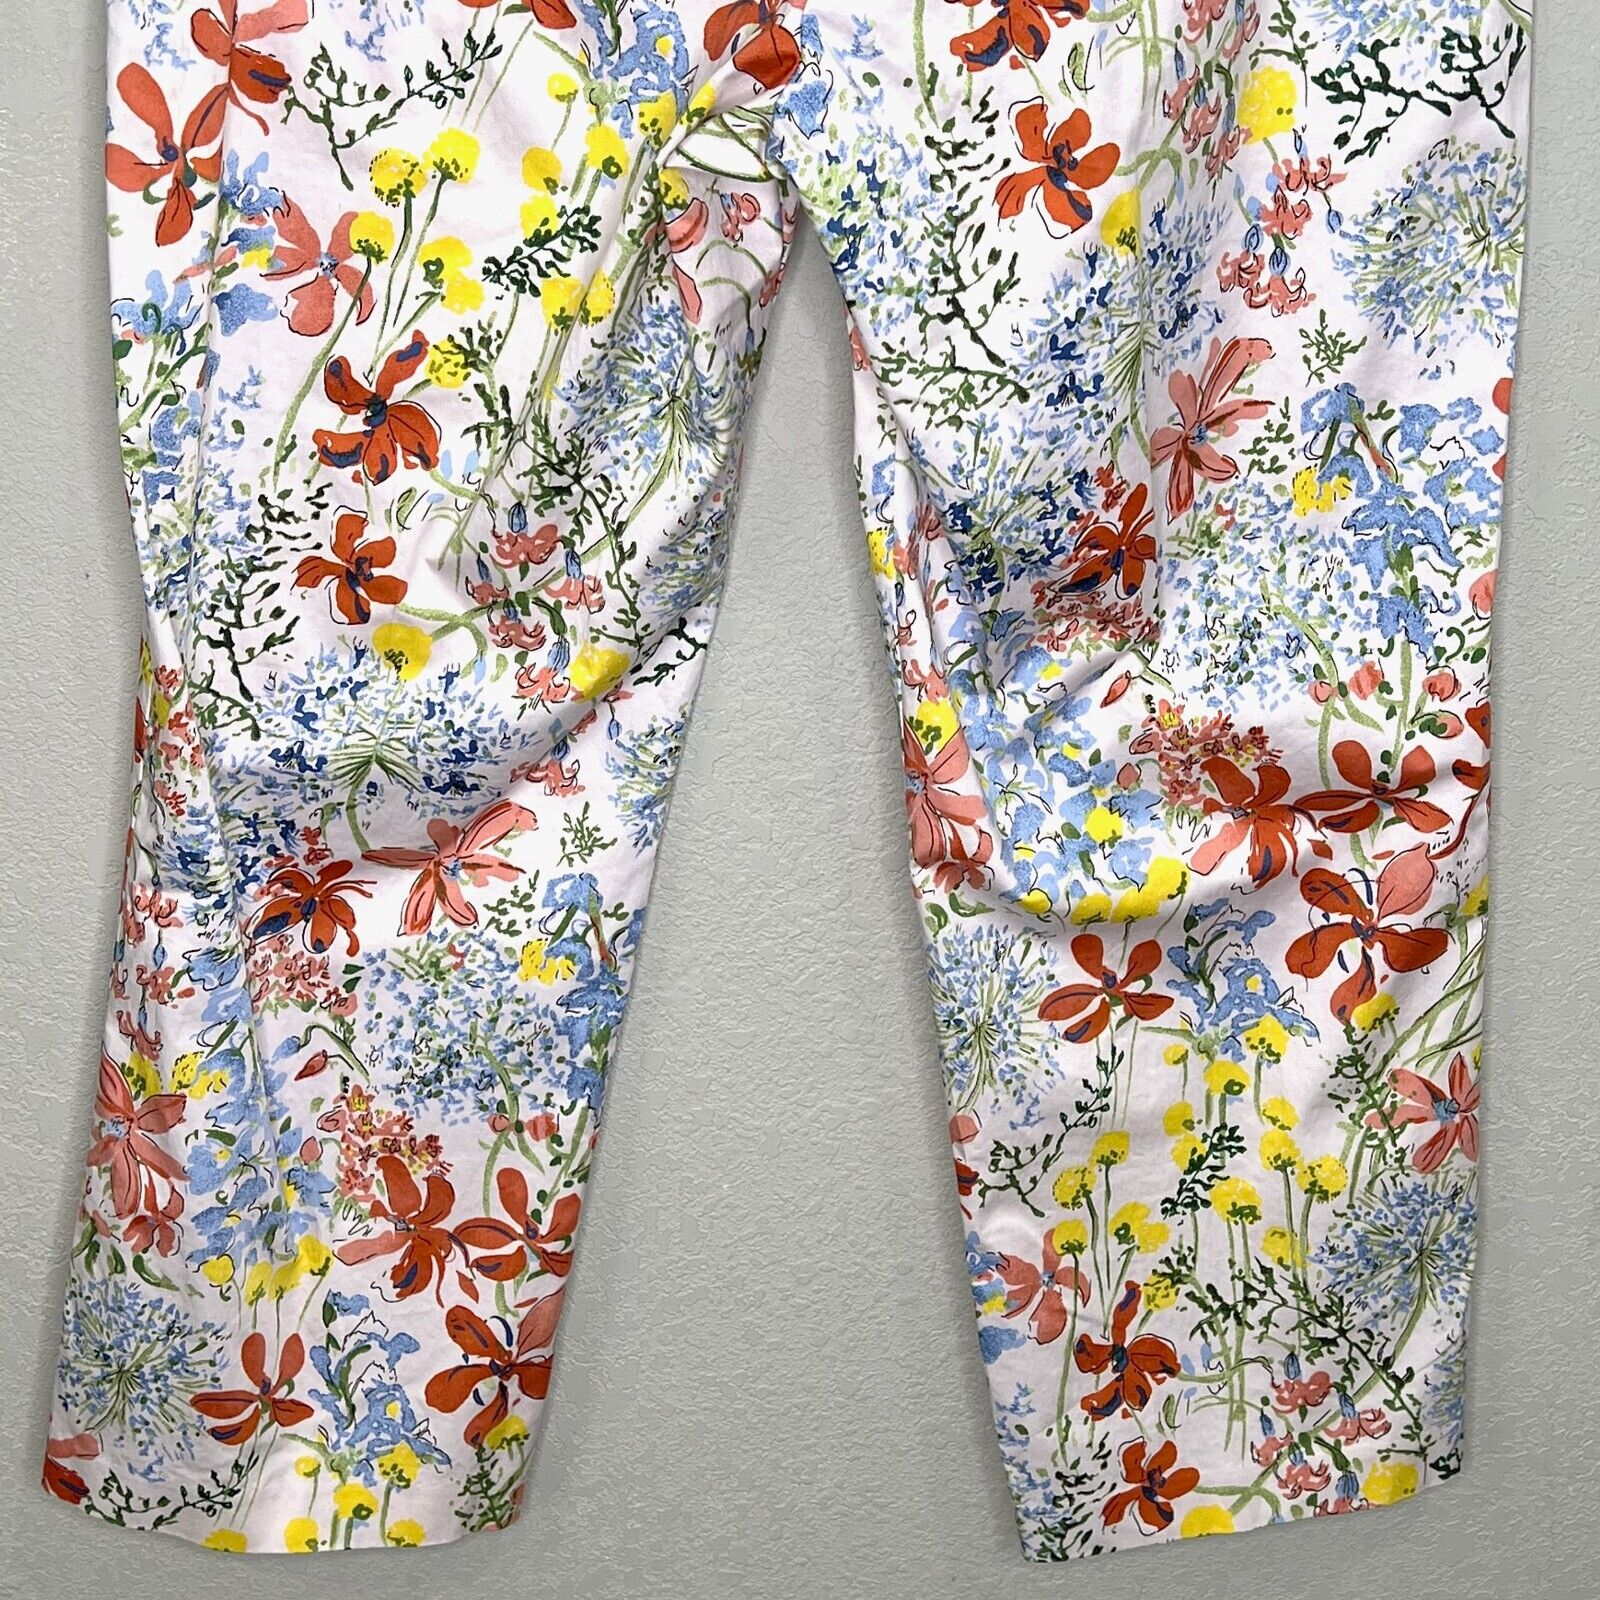 Brooks Brothers Cotton Blend Floral Stretch Capri Pants Size 12